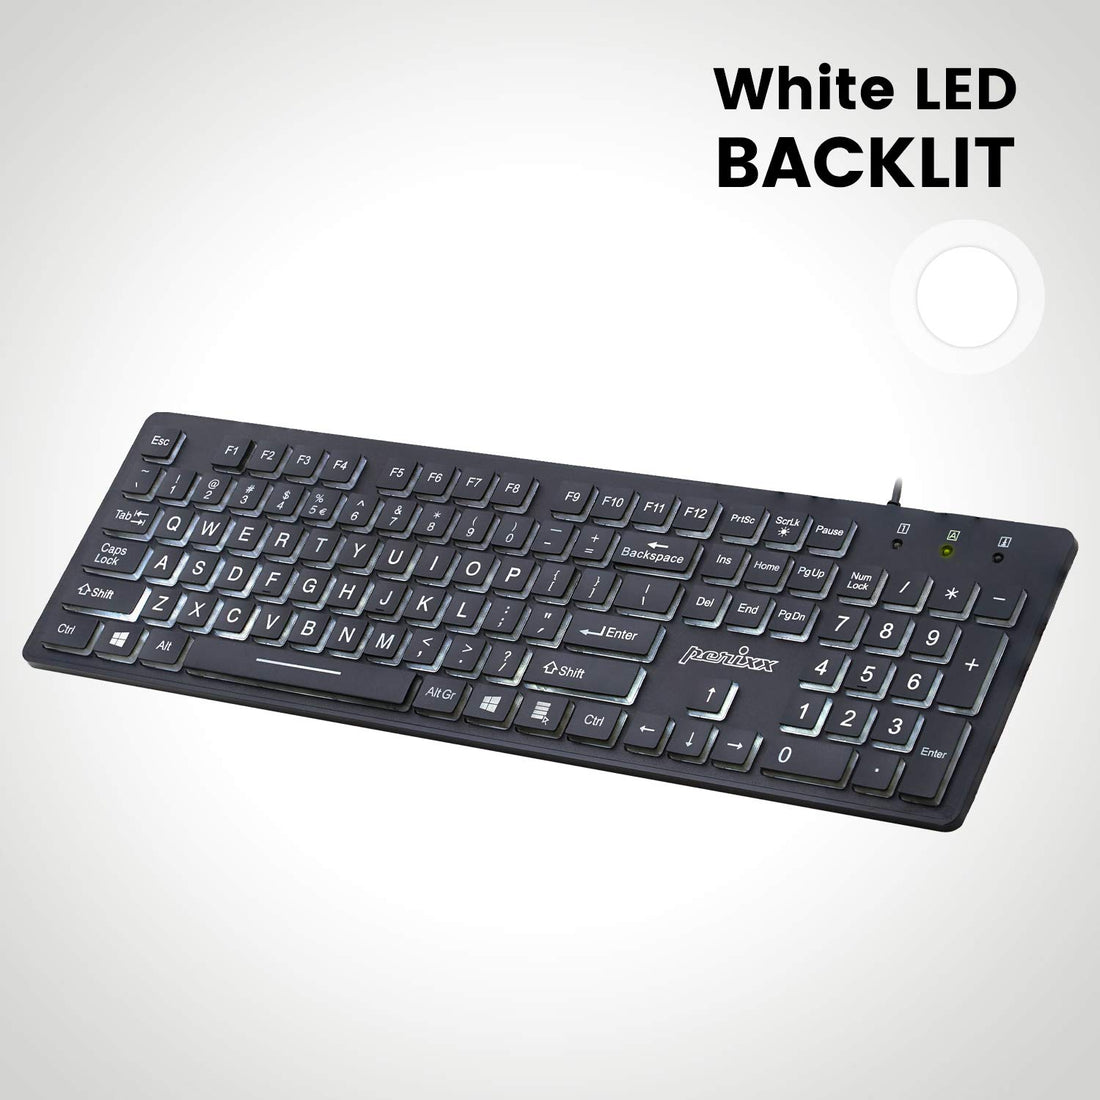 Perixx PERIBOARD-317 USB Wired Illuminated Keyboard - White LED Backlit - 17.32"x5.08"x1.06" Dimension